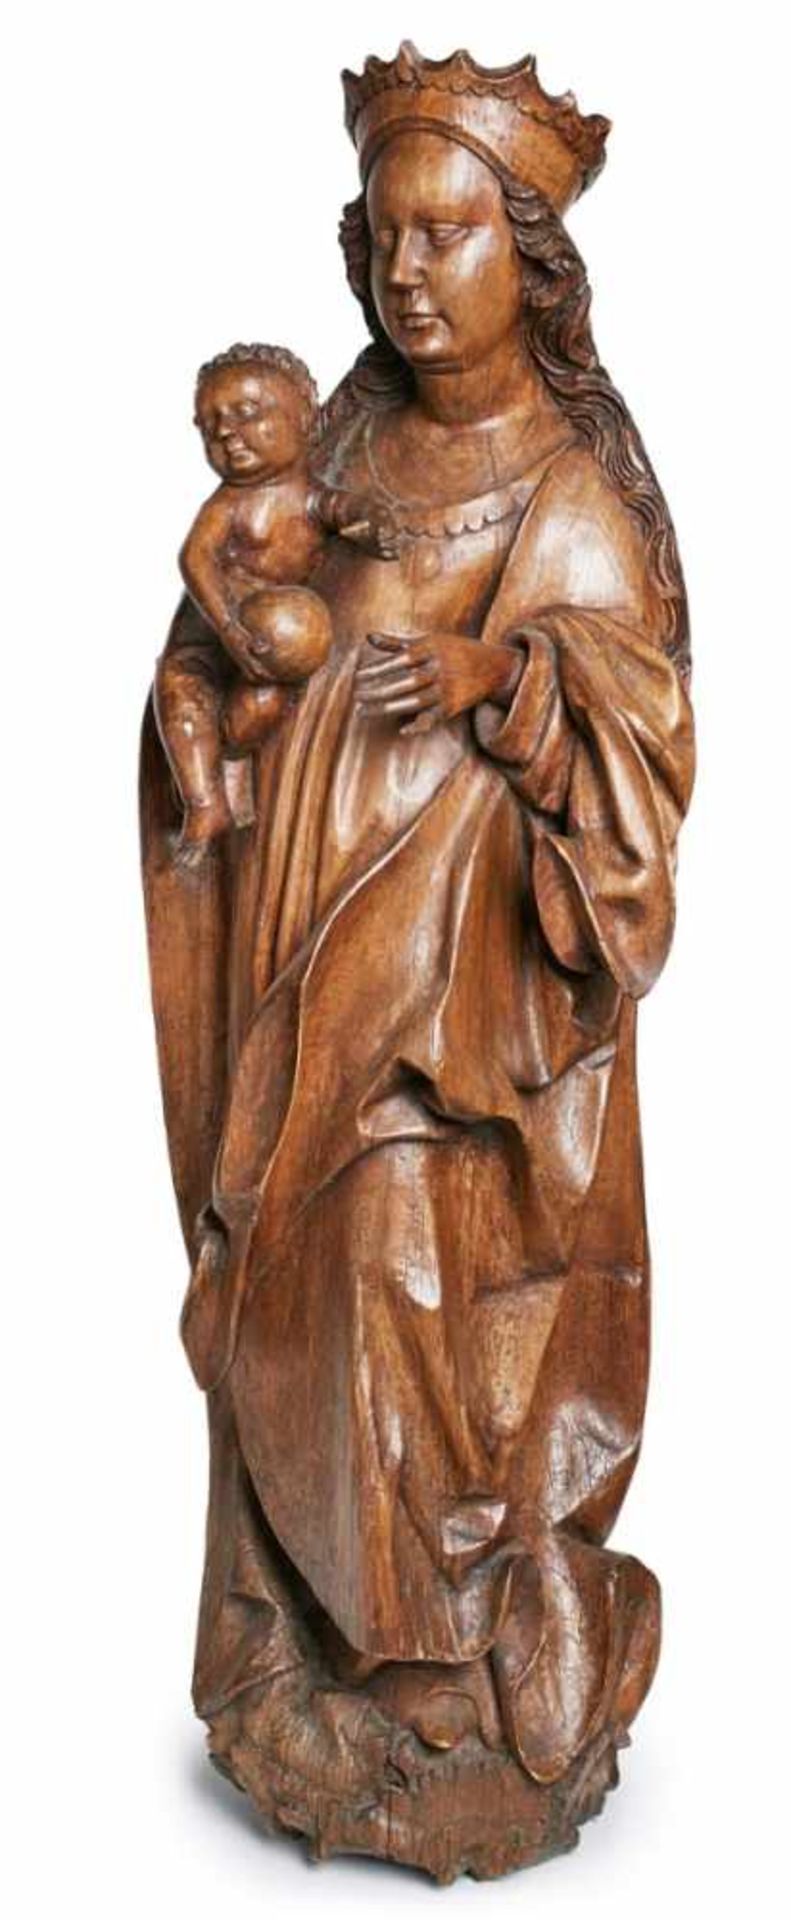 Gr. Skulptur "Madonna mit dem Knaben",Nürnberg um 1515-20, Umkreis/Werkstatt Veit Stoss. - Image 2 of 3